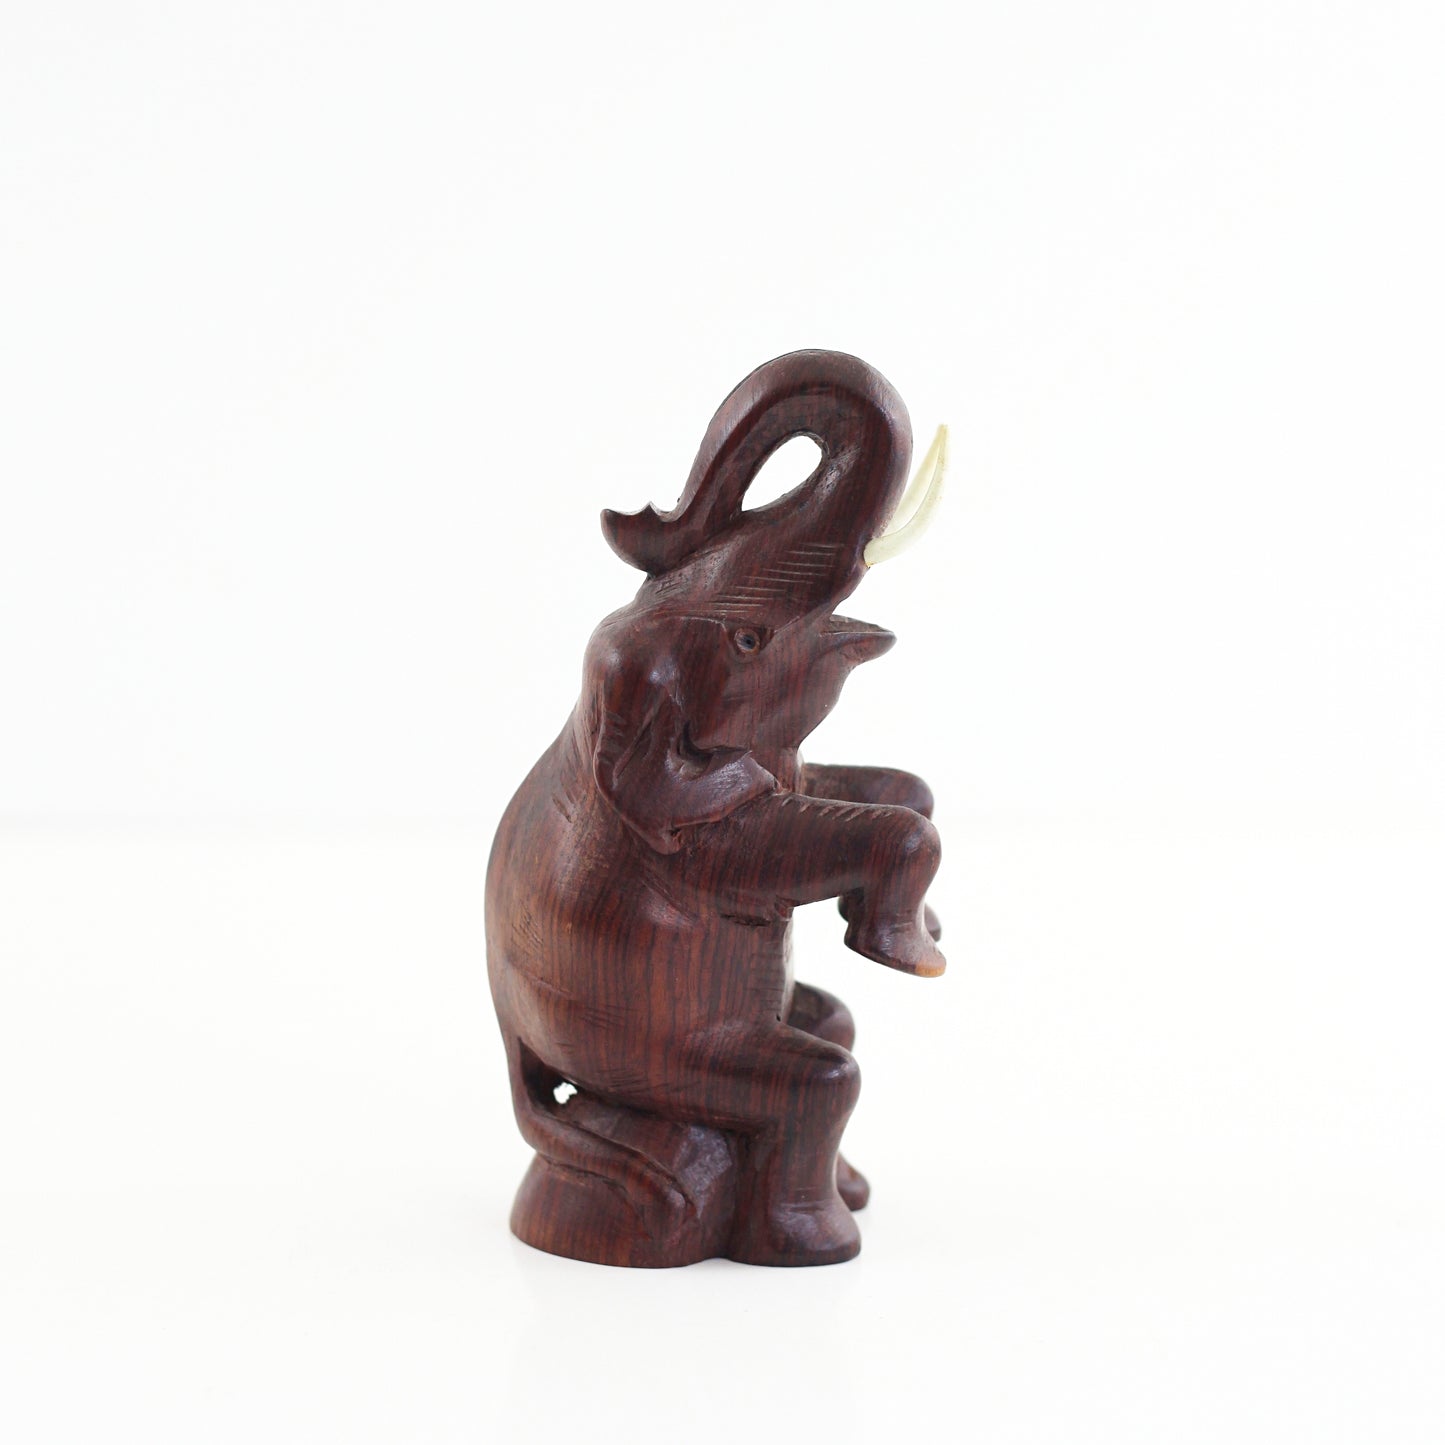 SOLD - Vintage Carved Wood Elephant Figurine